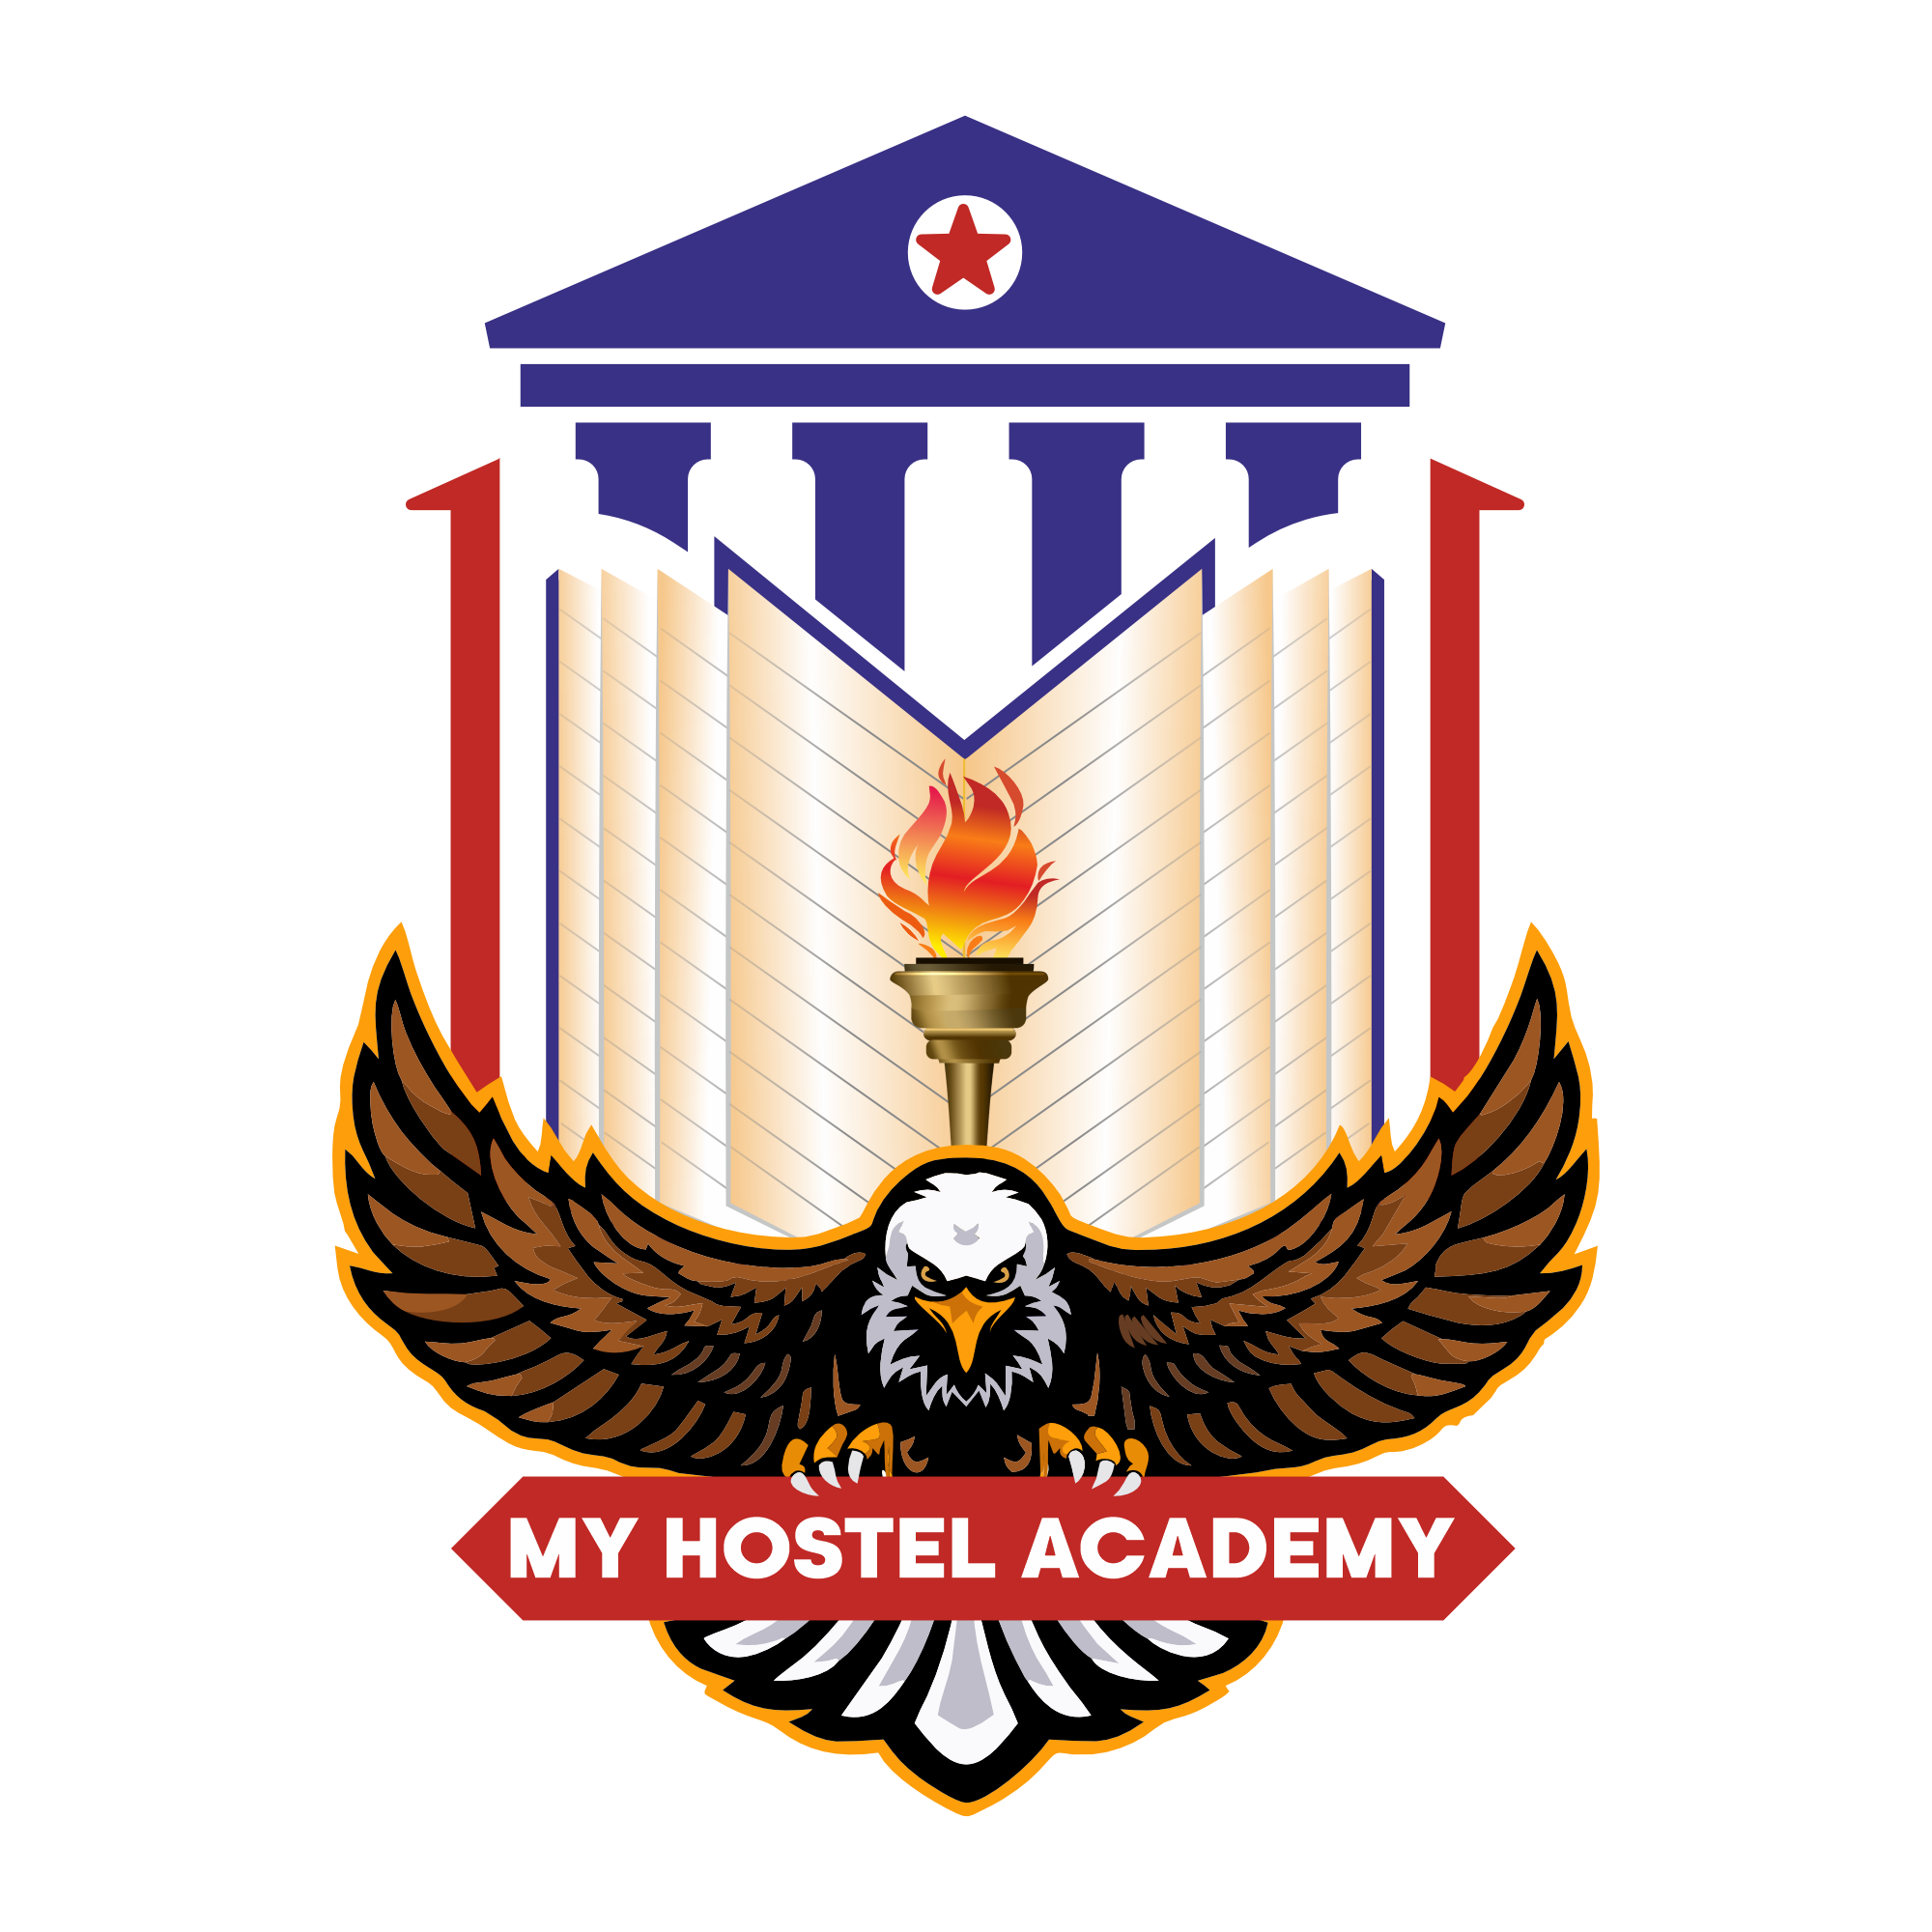 My Hostel Academy